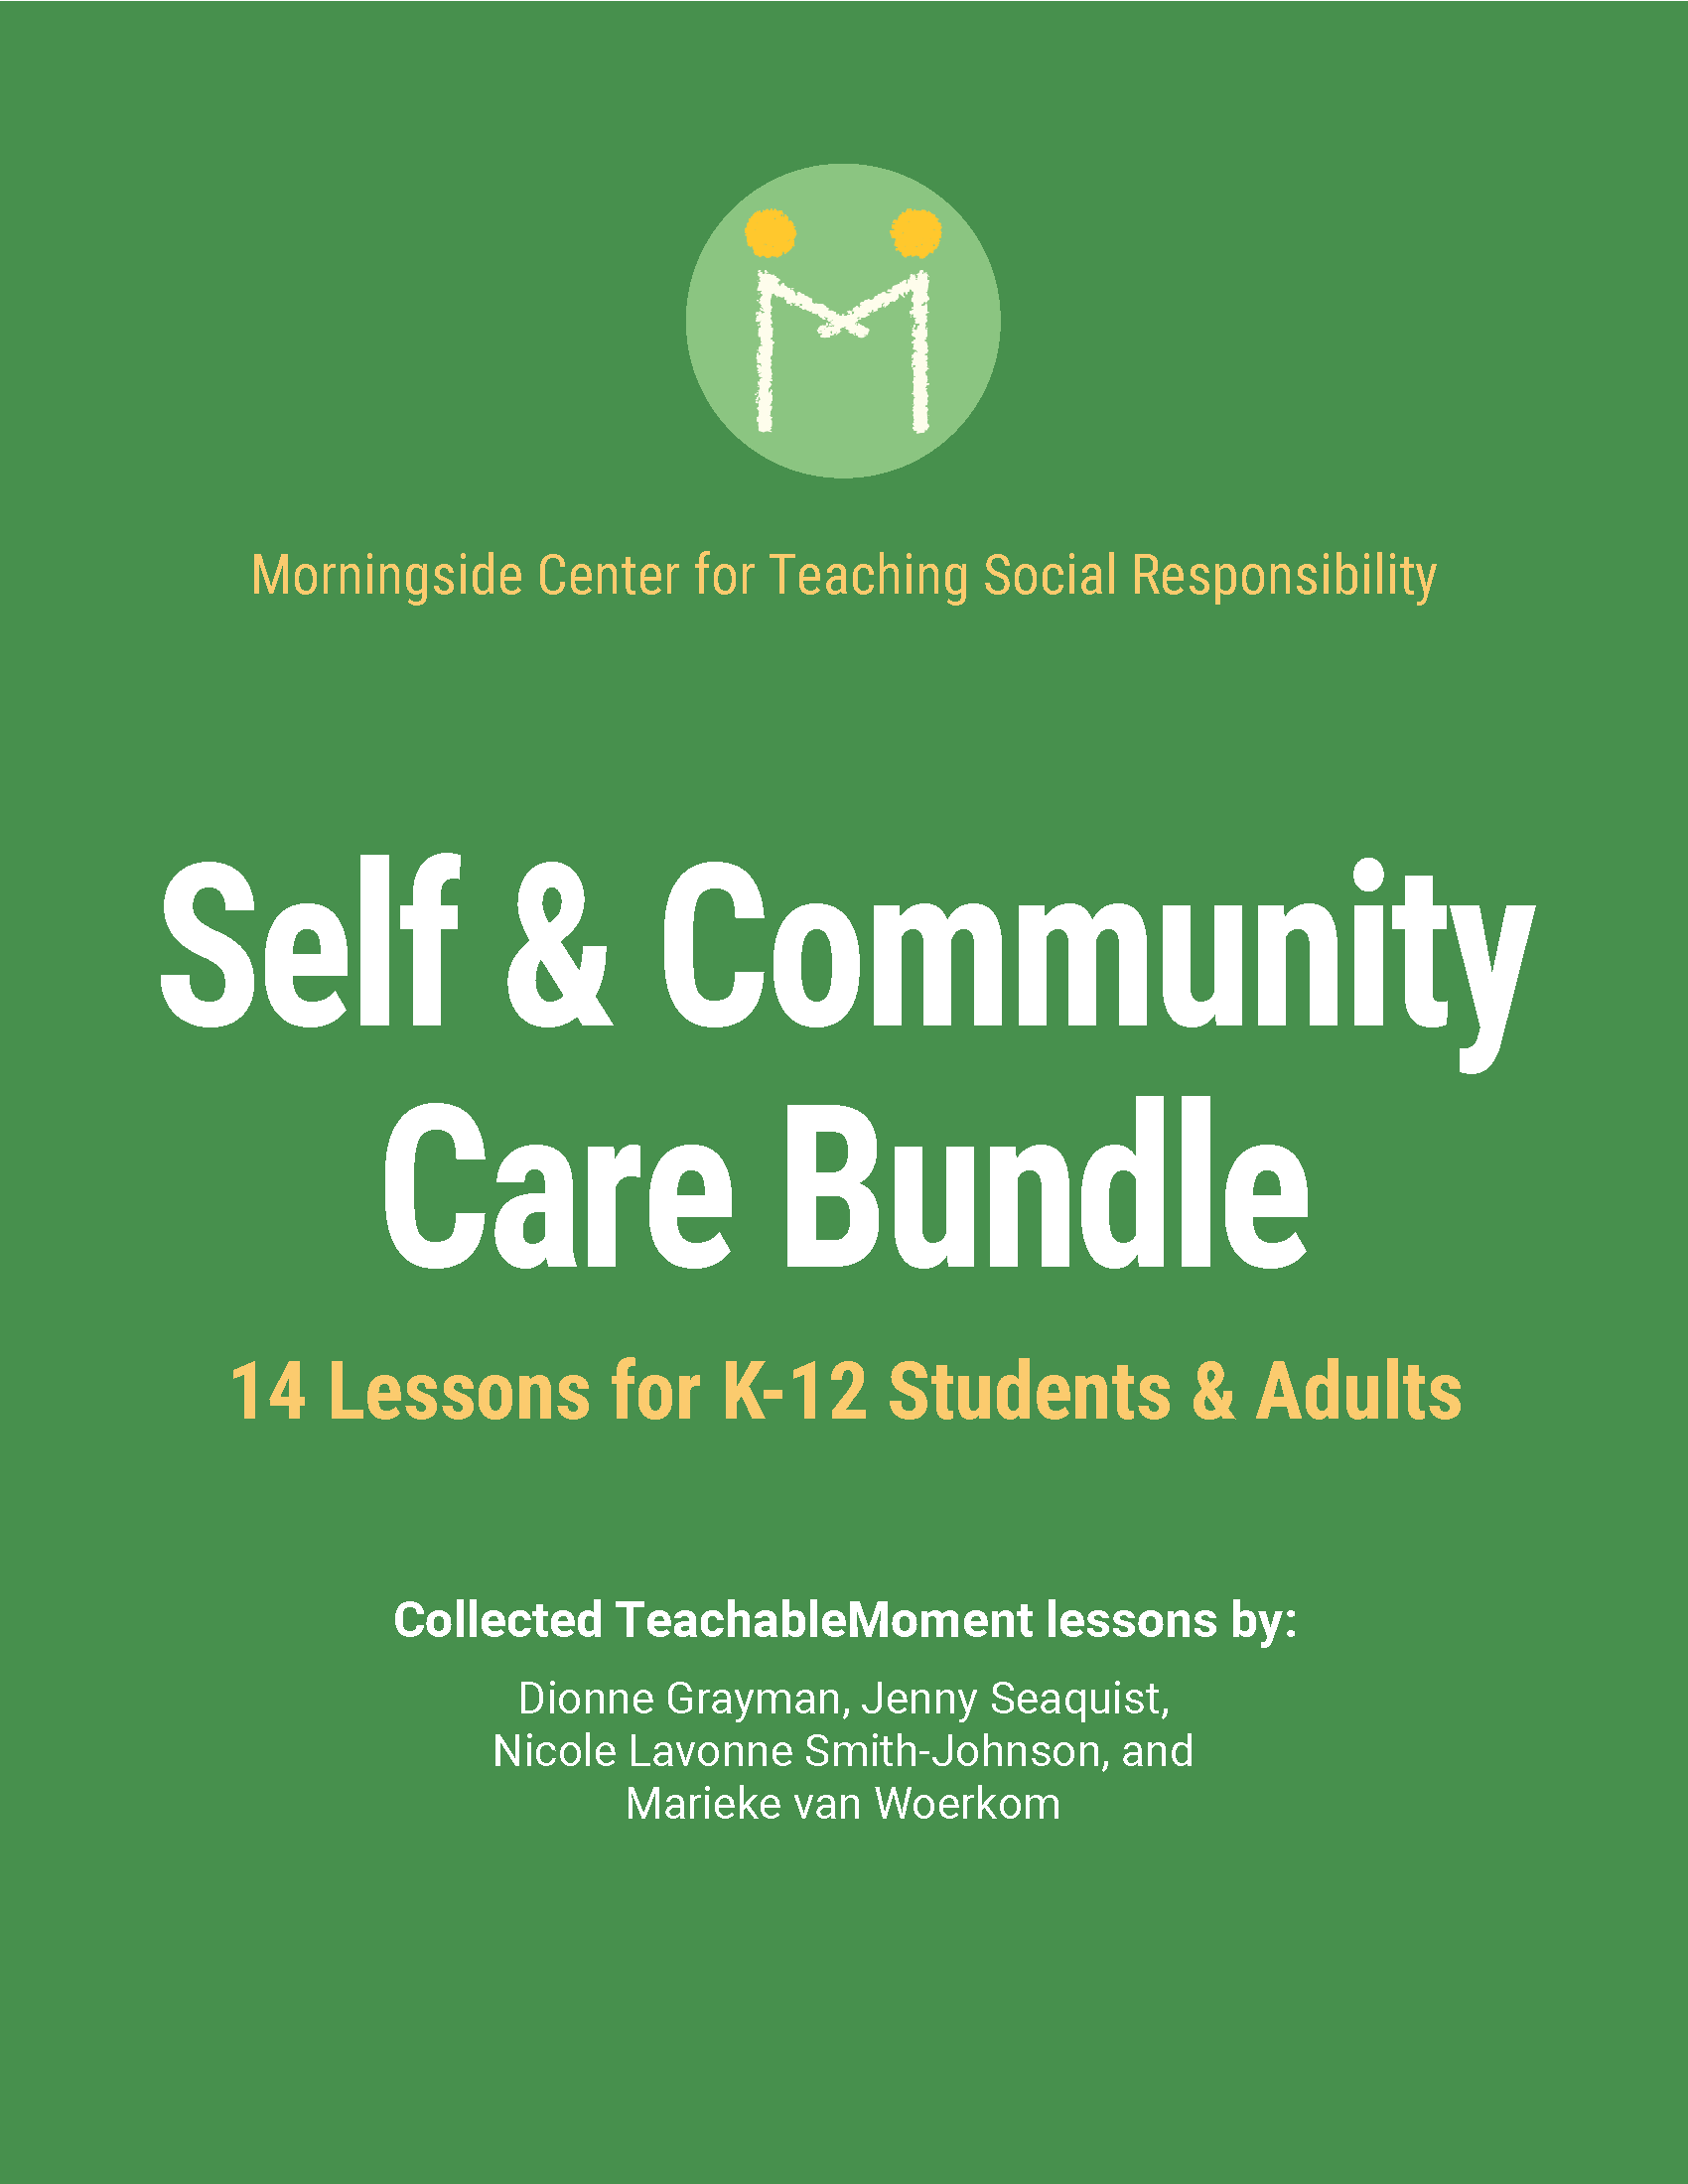 self & community care bundle cover